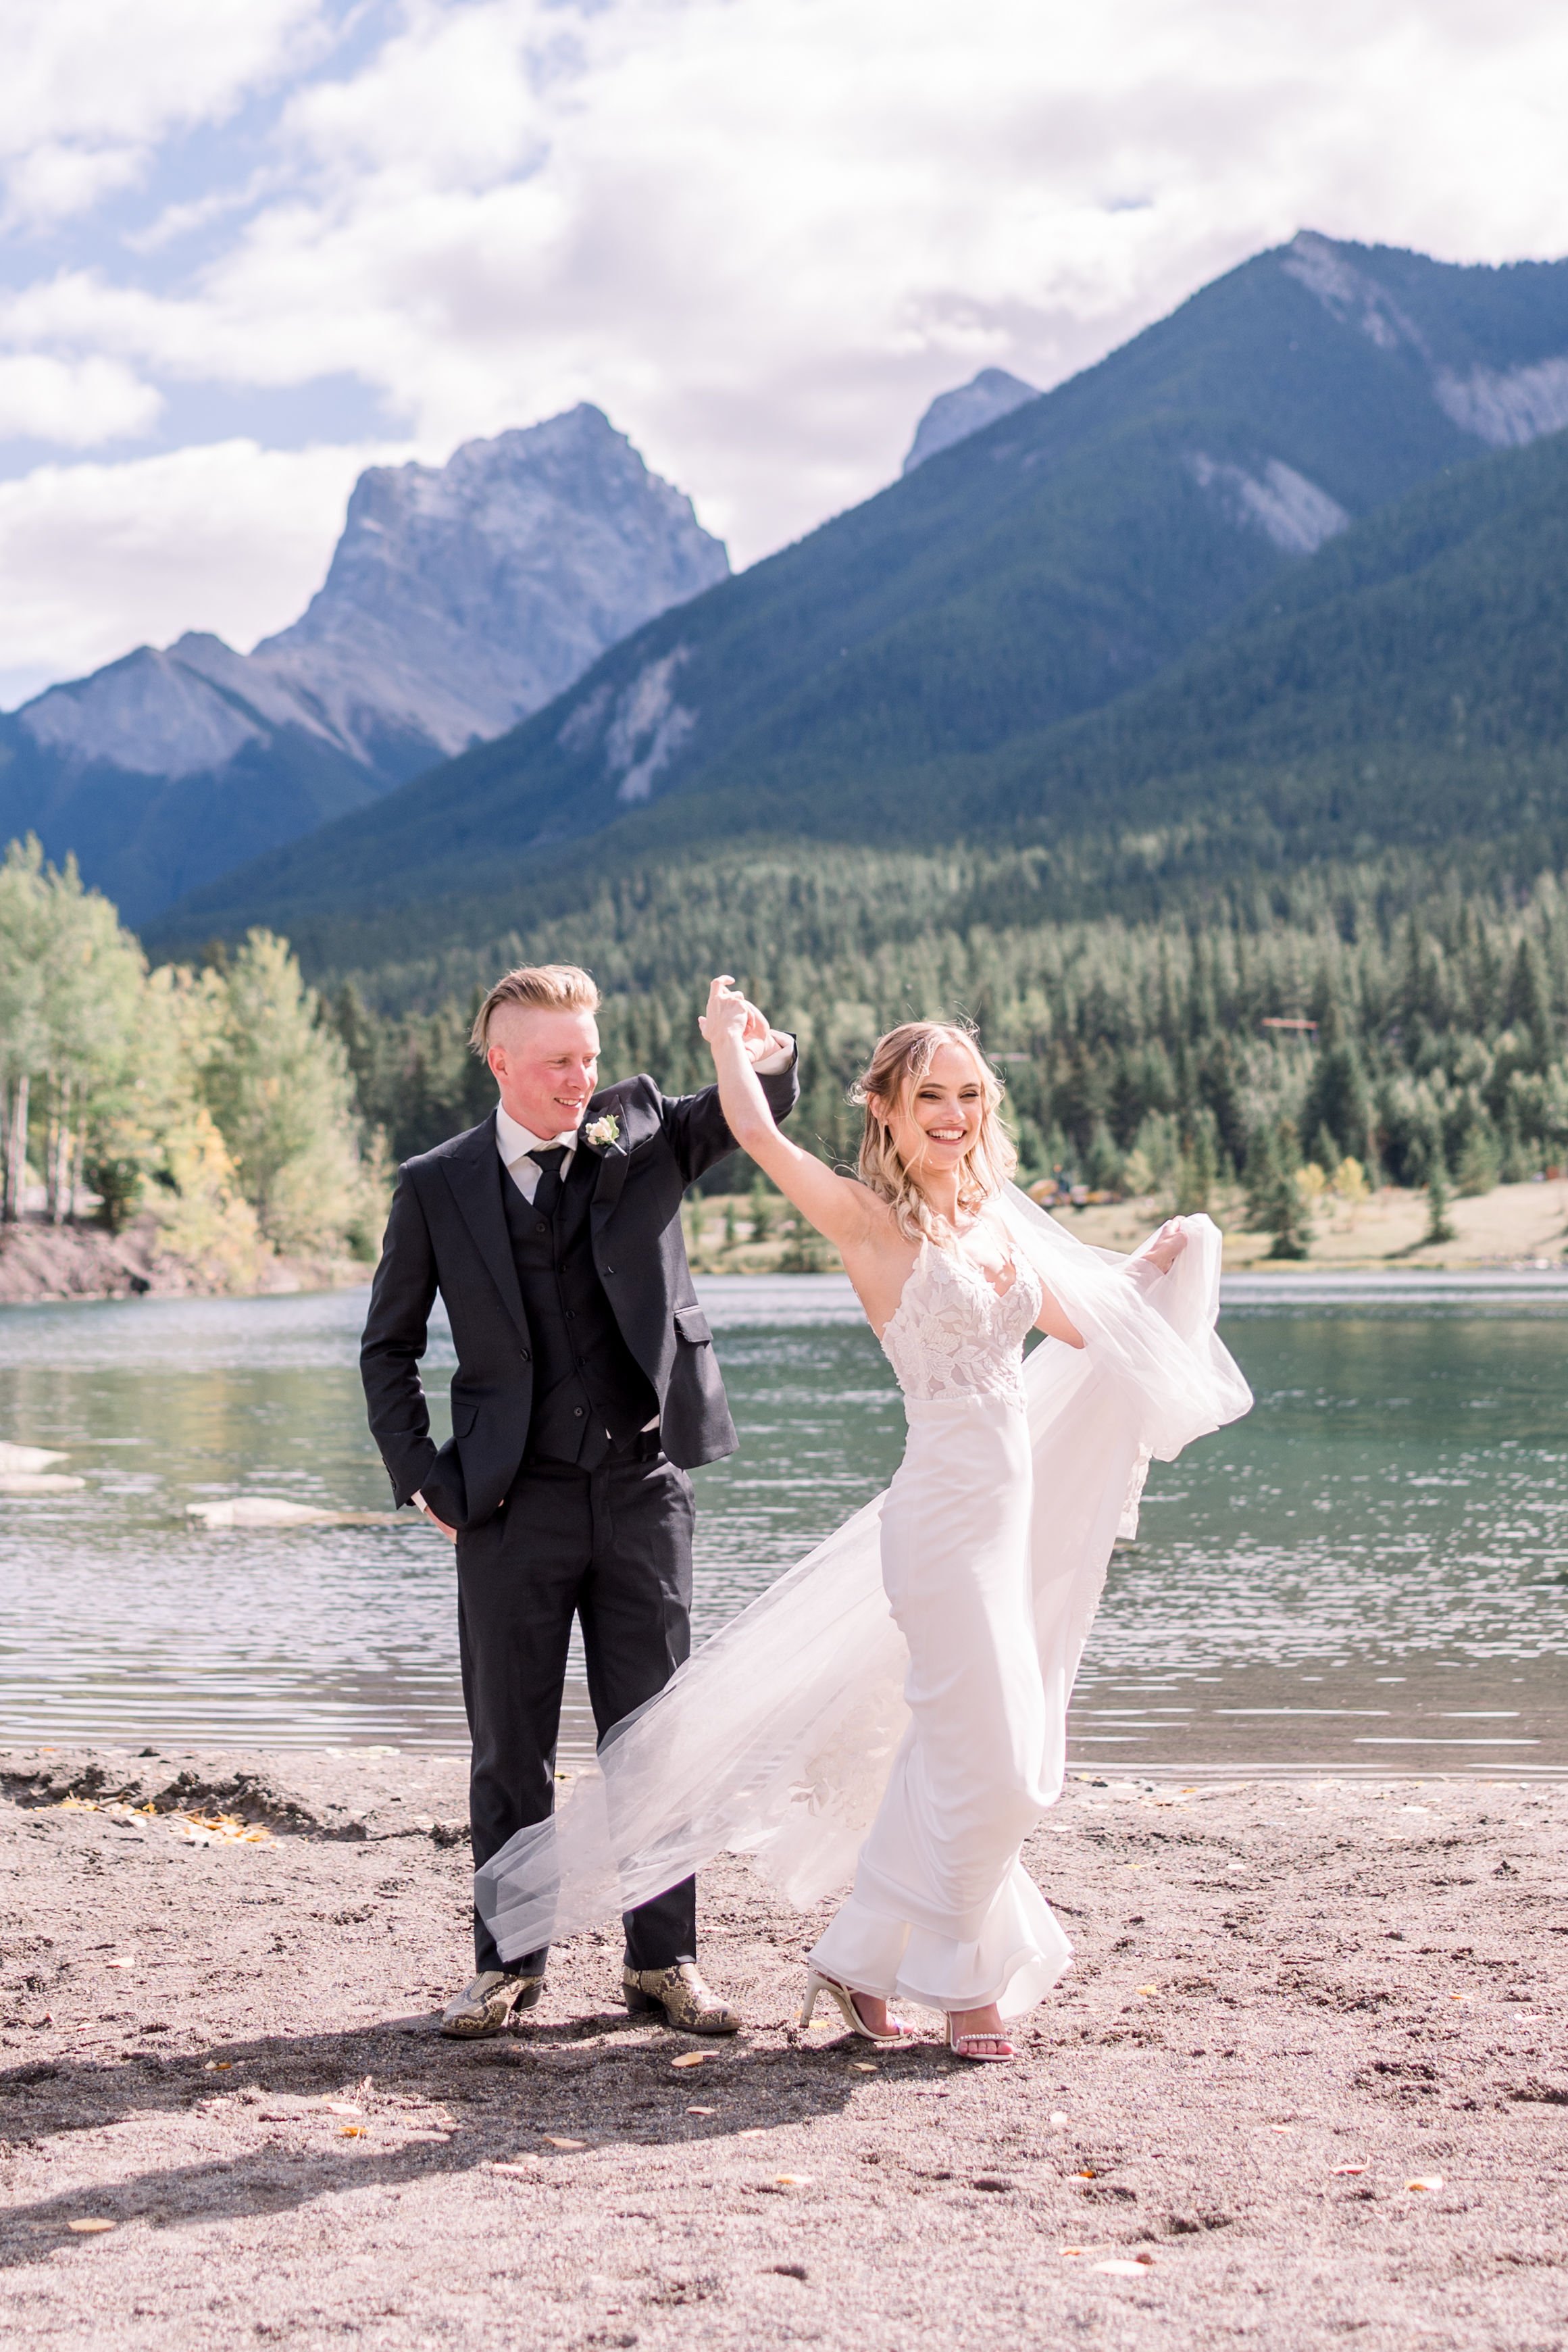  Next to a mountain lake, a groom twirls his bride captured by Chelsea Mason Photography. mountain lake wedding portraits #Albertaweddings #shesaidyes #Albertaweddingphotographers #SilvertipGolfCourse #ChelseaMasonPhotography #ChelseaMasonWeddings  